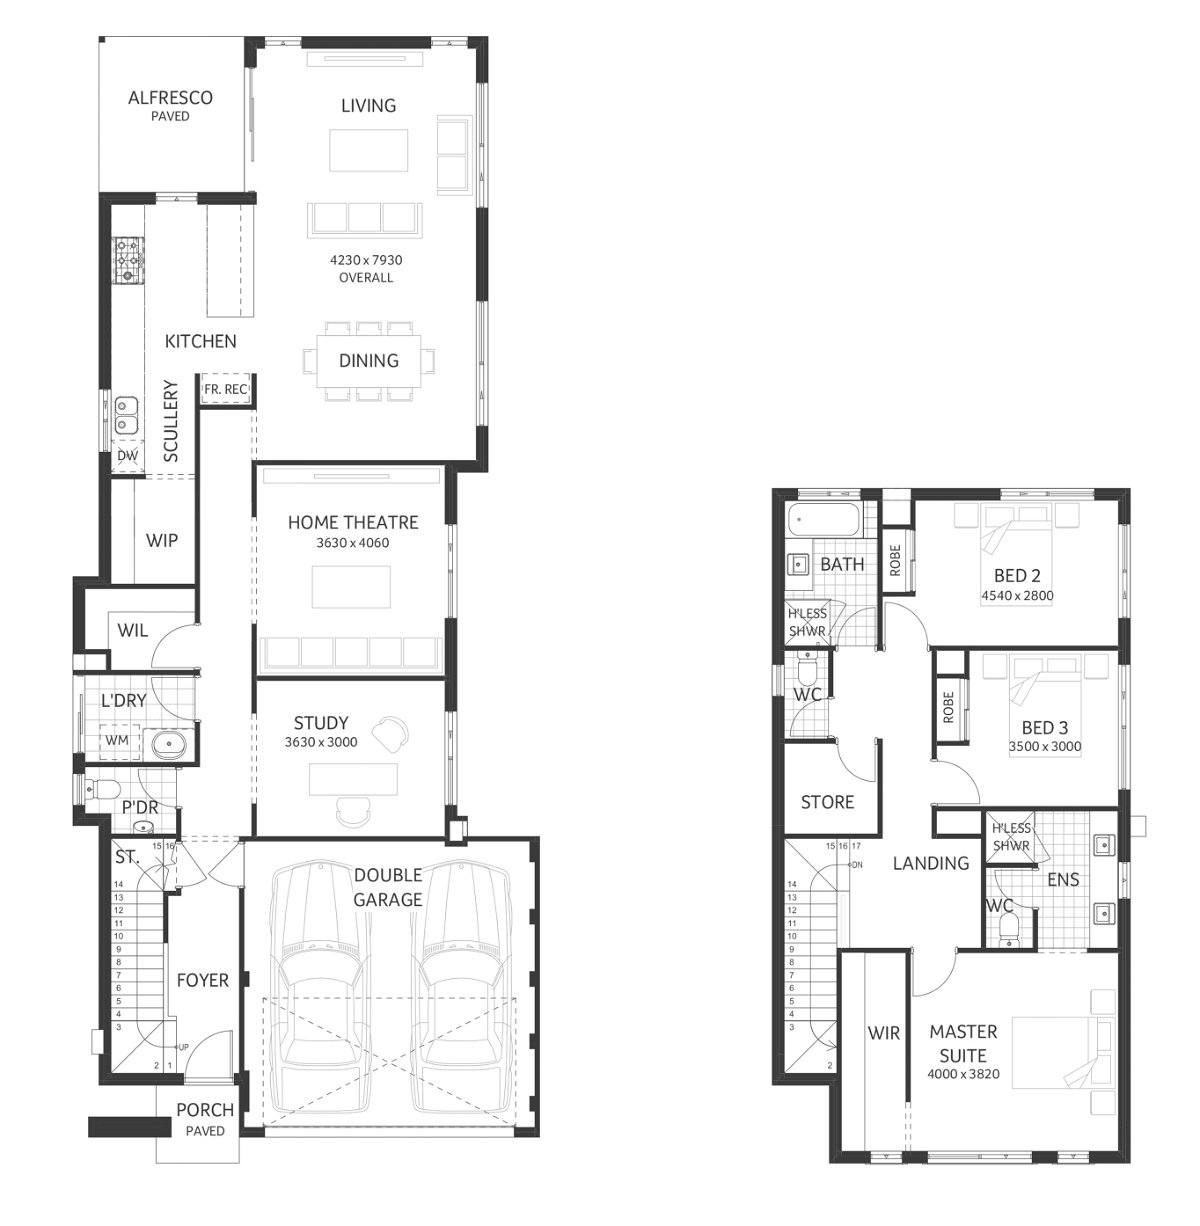 Plunkett Homes - Grantham | Hamptons - Floorplan - Grantham Luxe Hamptons Marketing Plan Cropeed Jpg